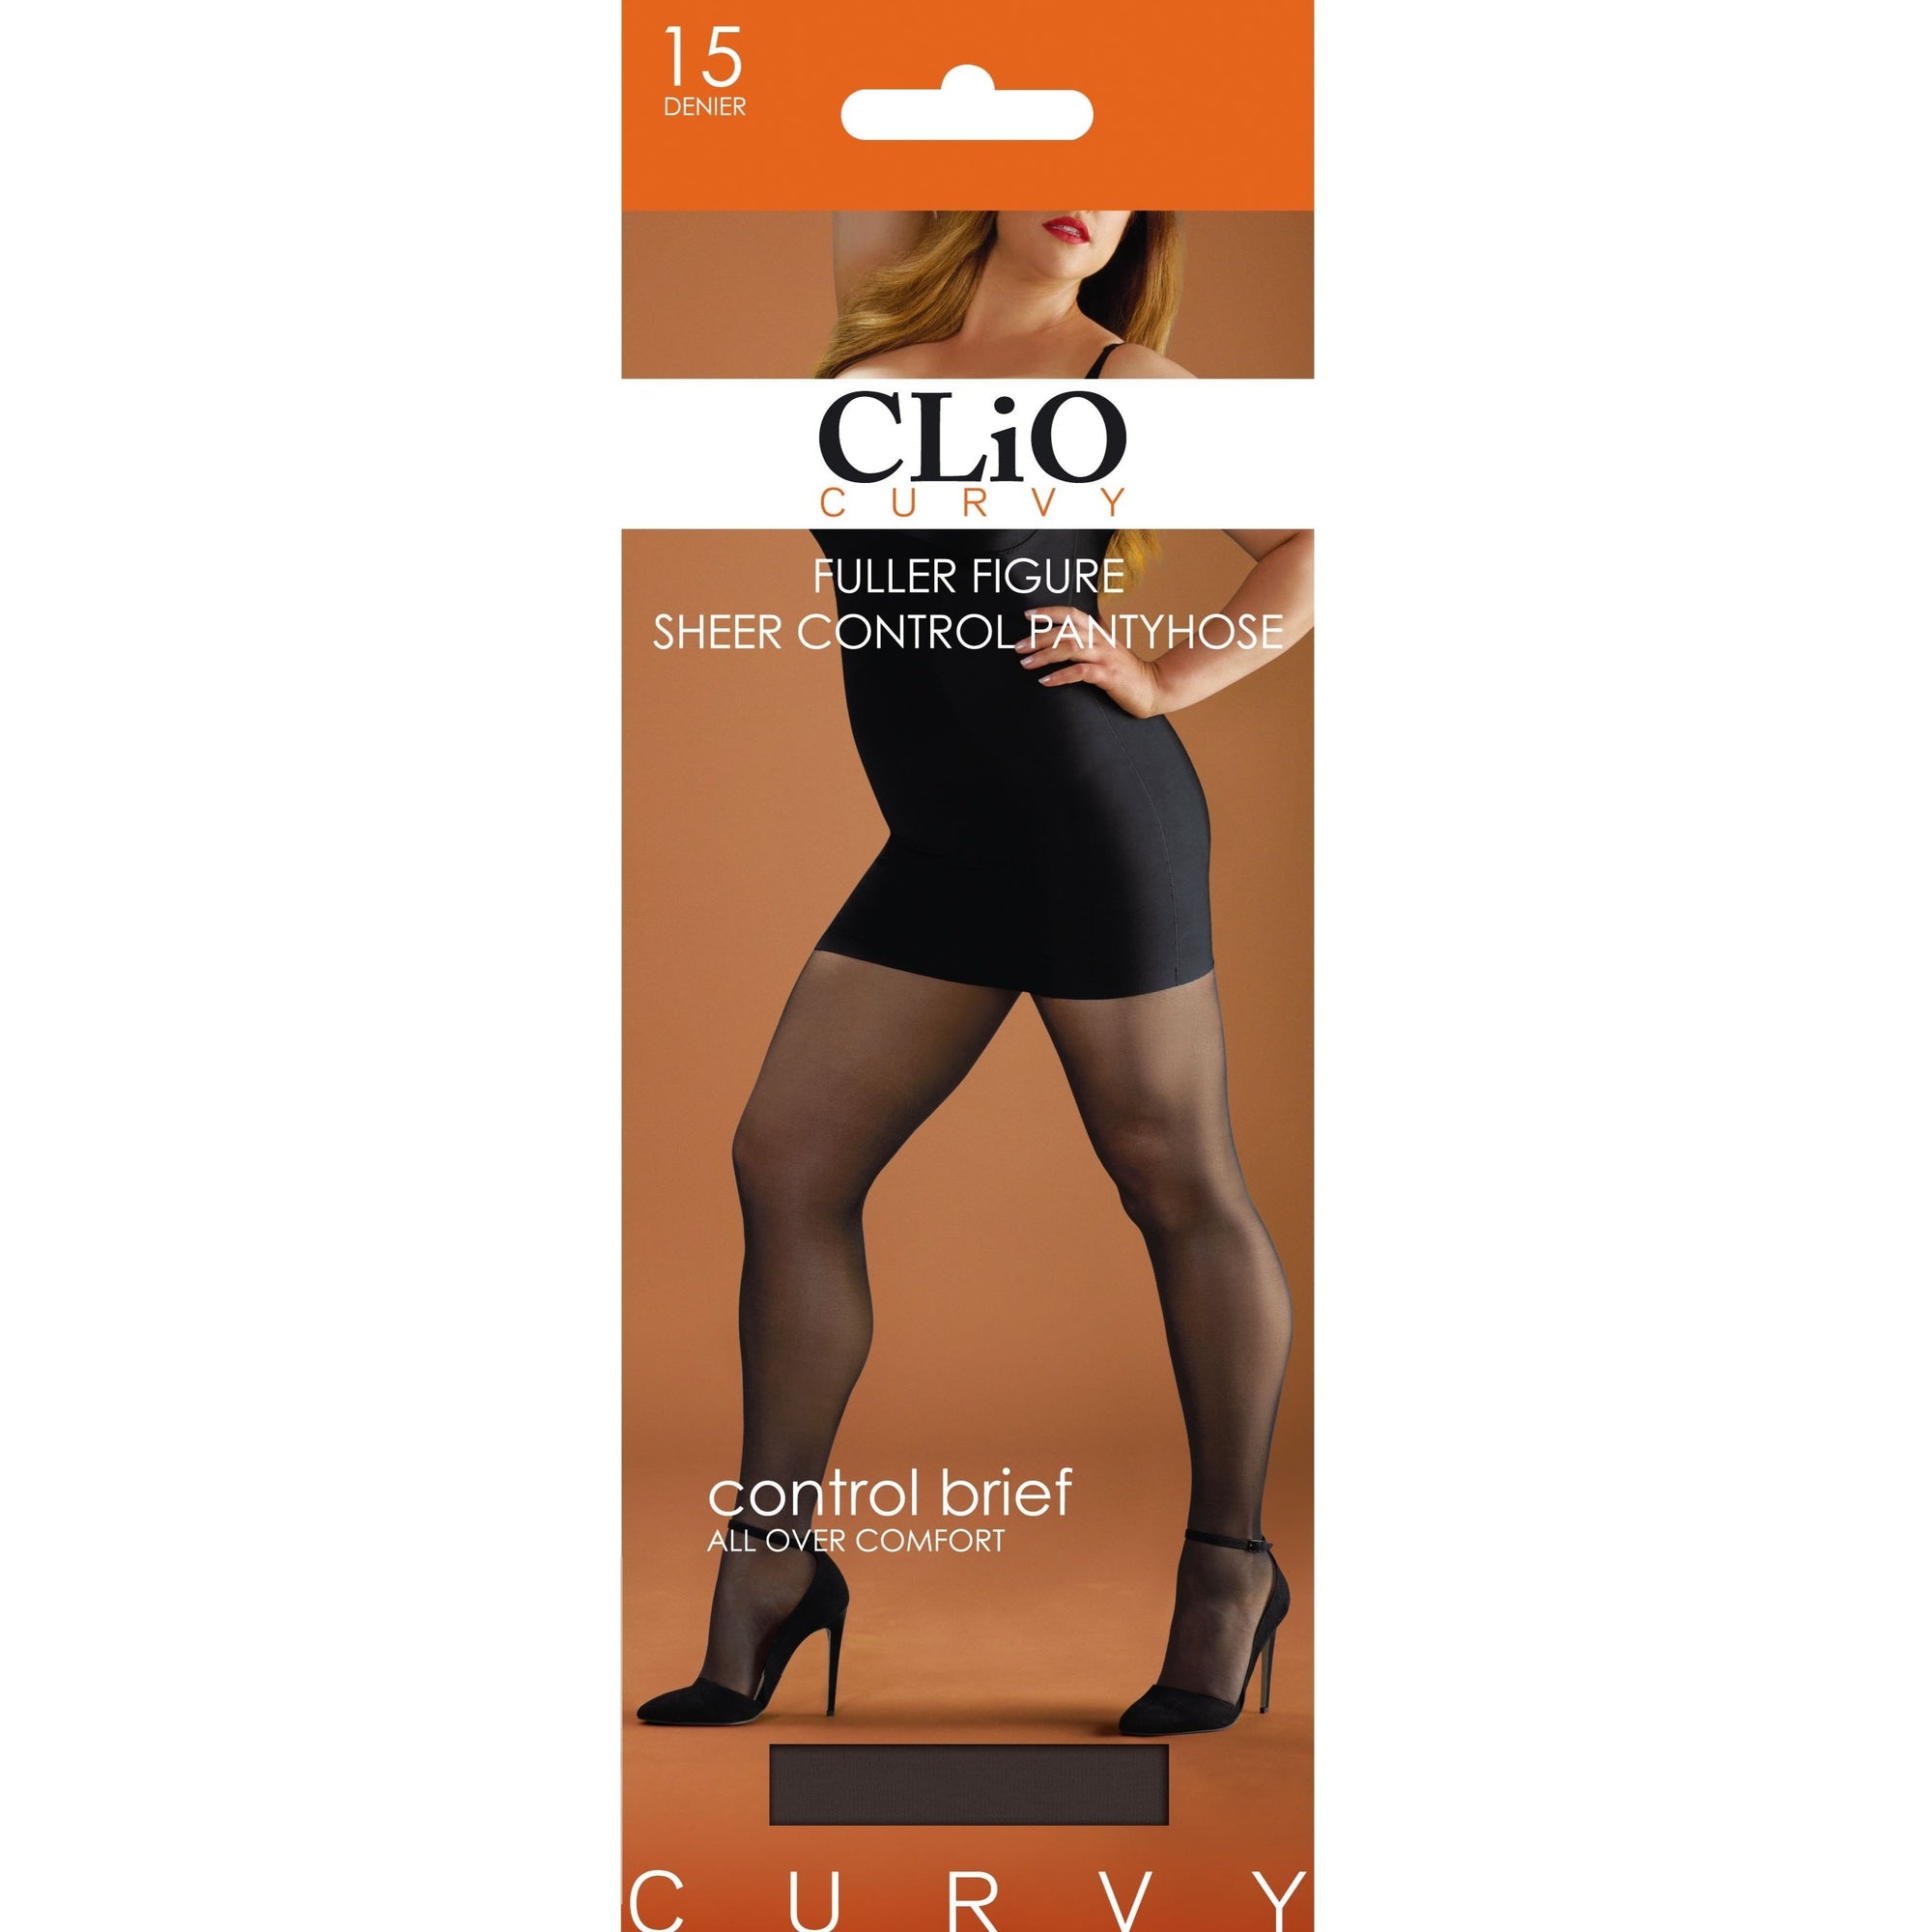 Clio Curvy Fuller Figure Sheer Control